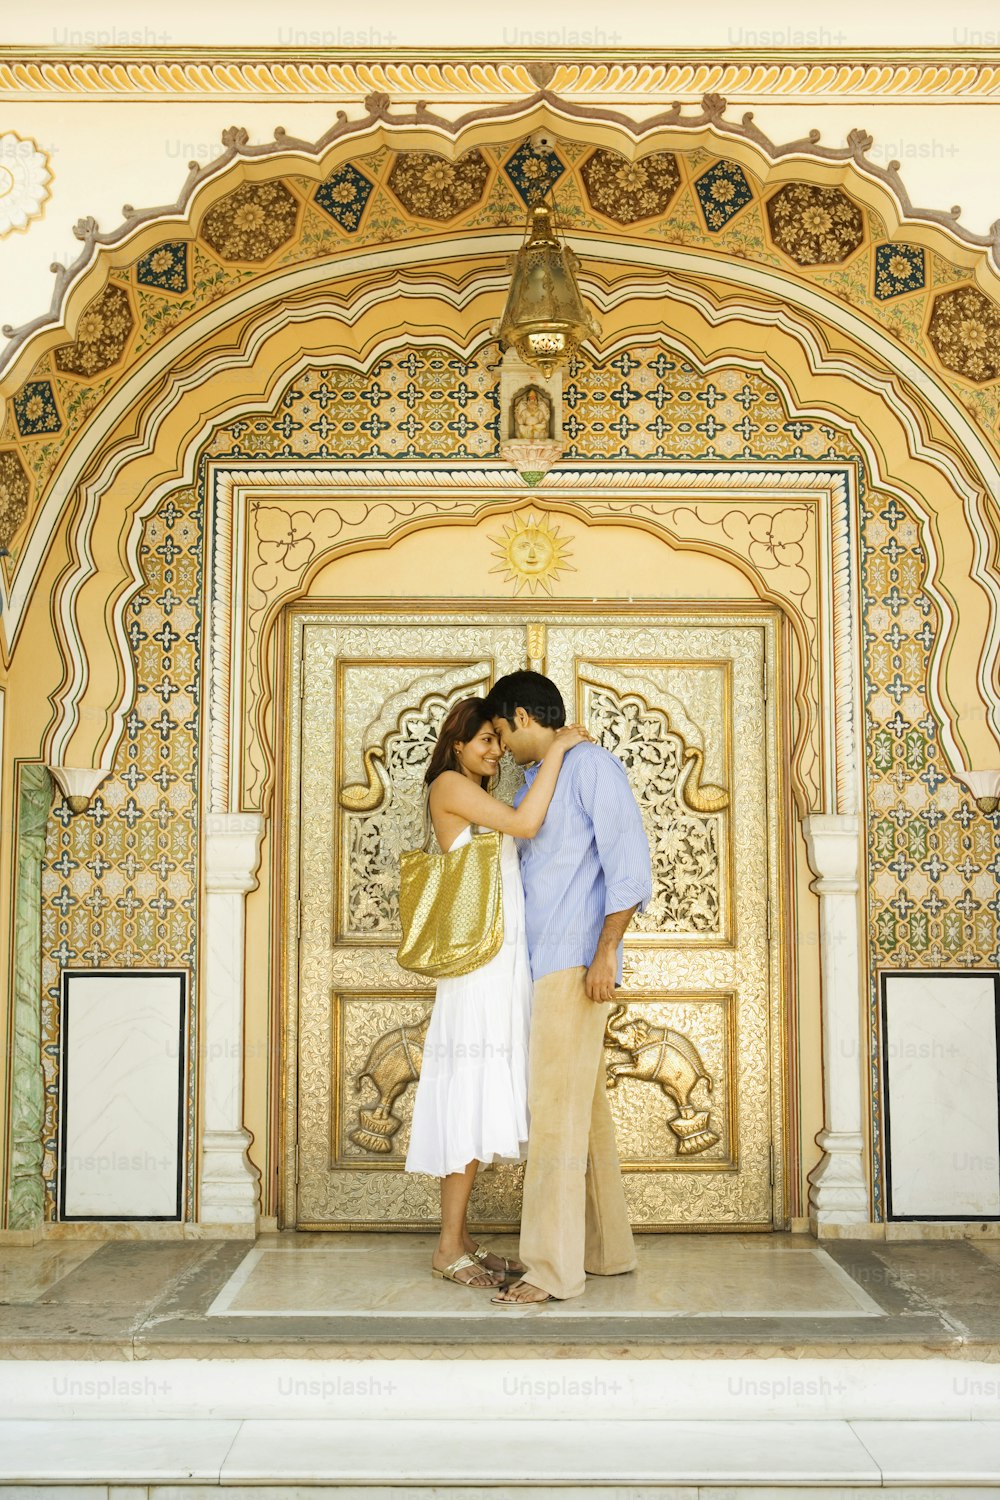 Una pareja besándose frente a una puerta dorada